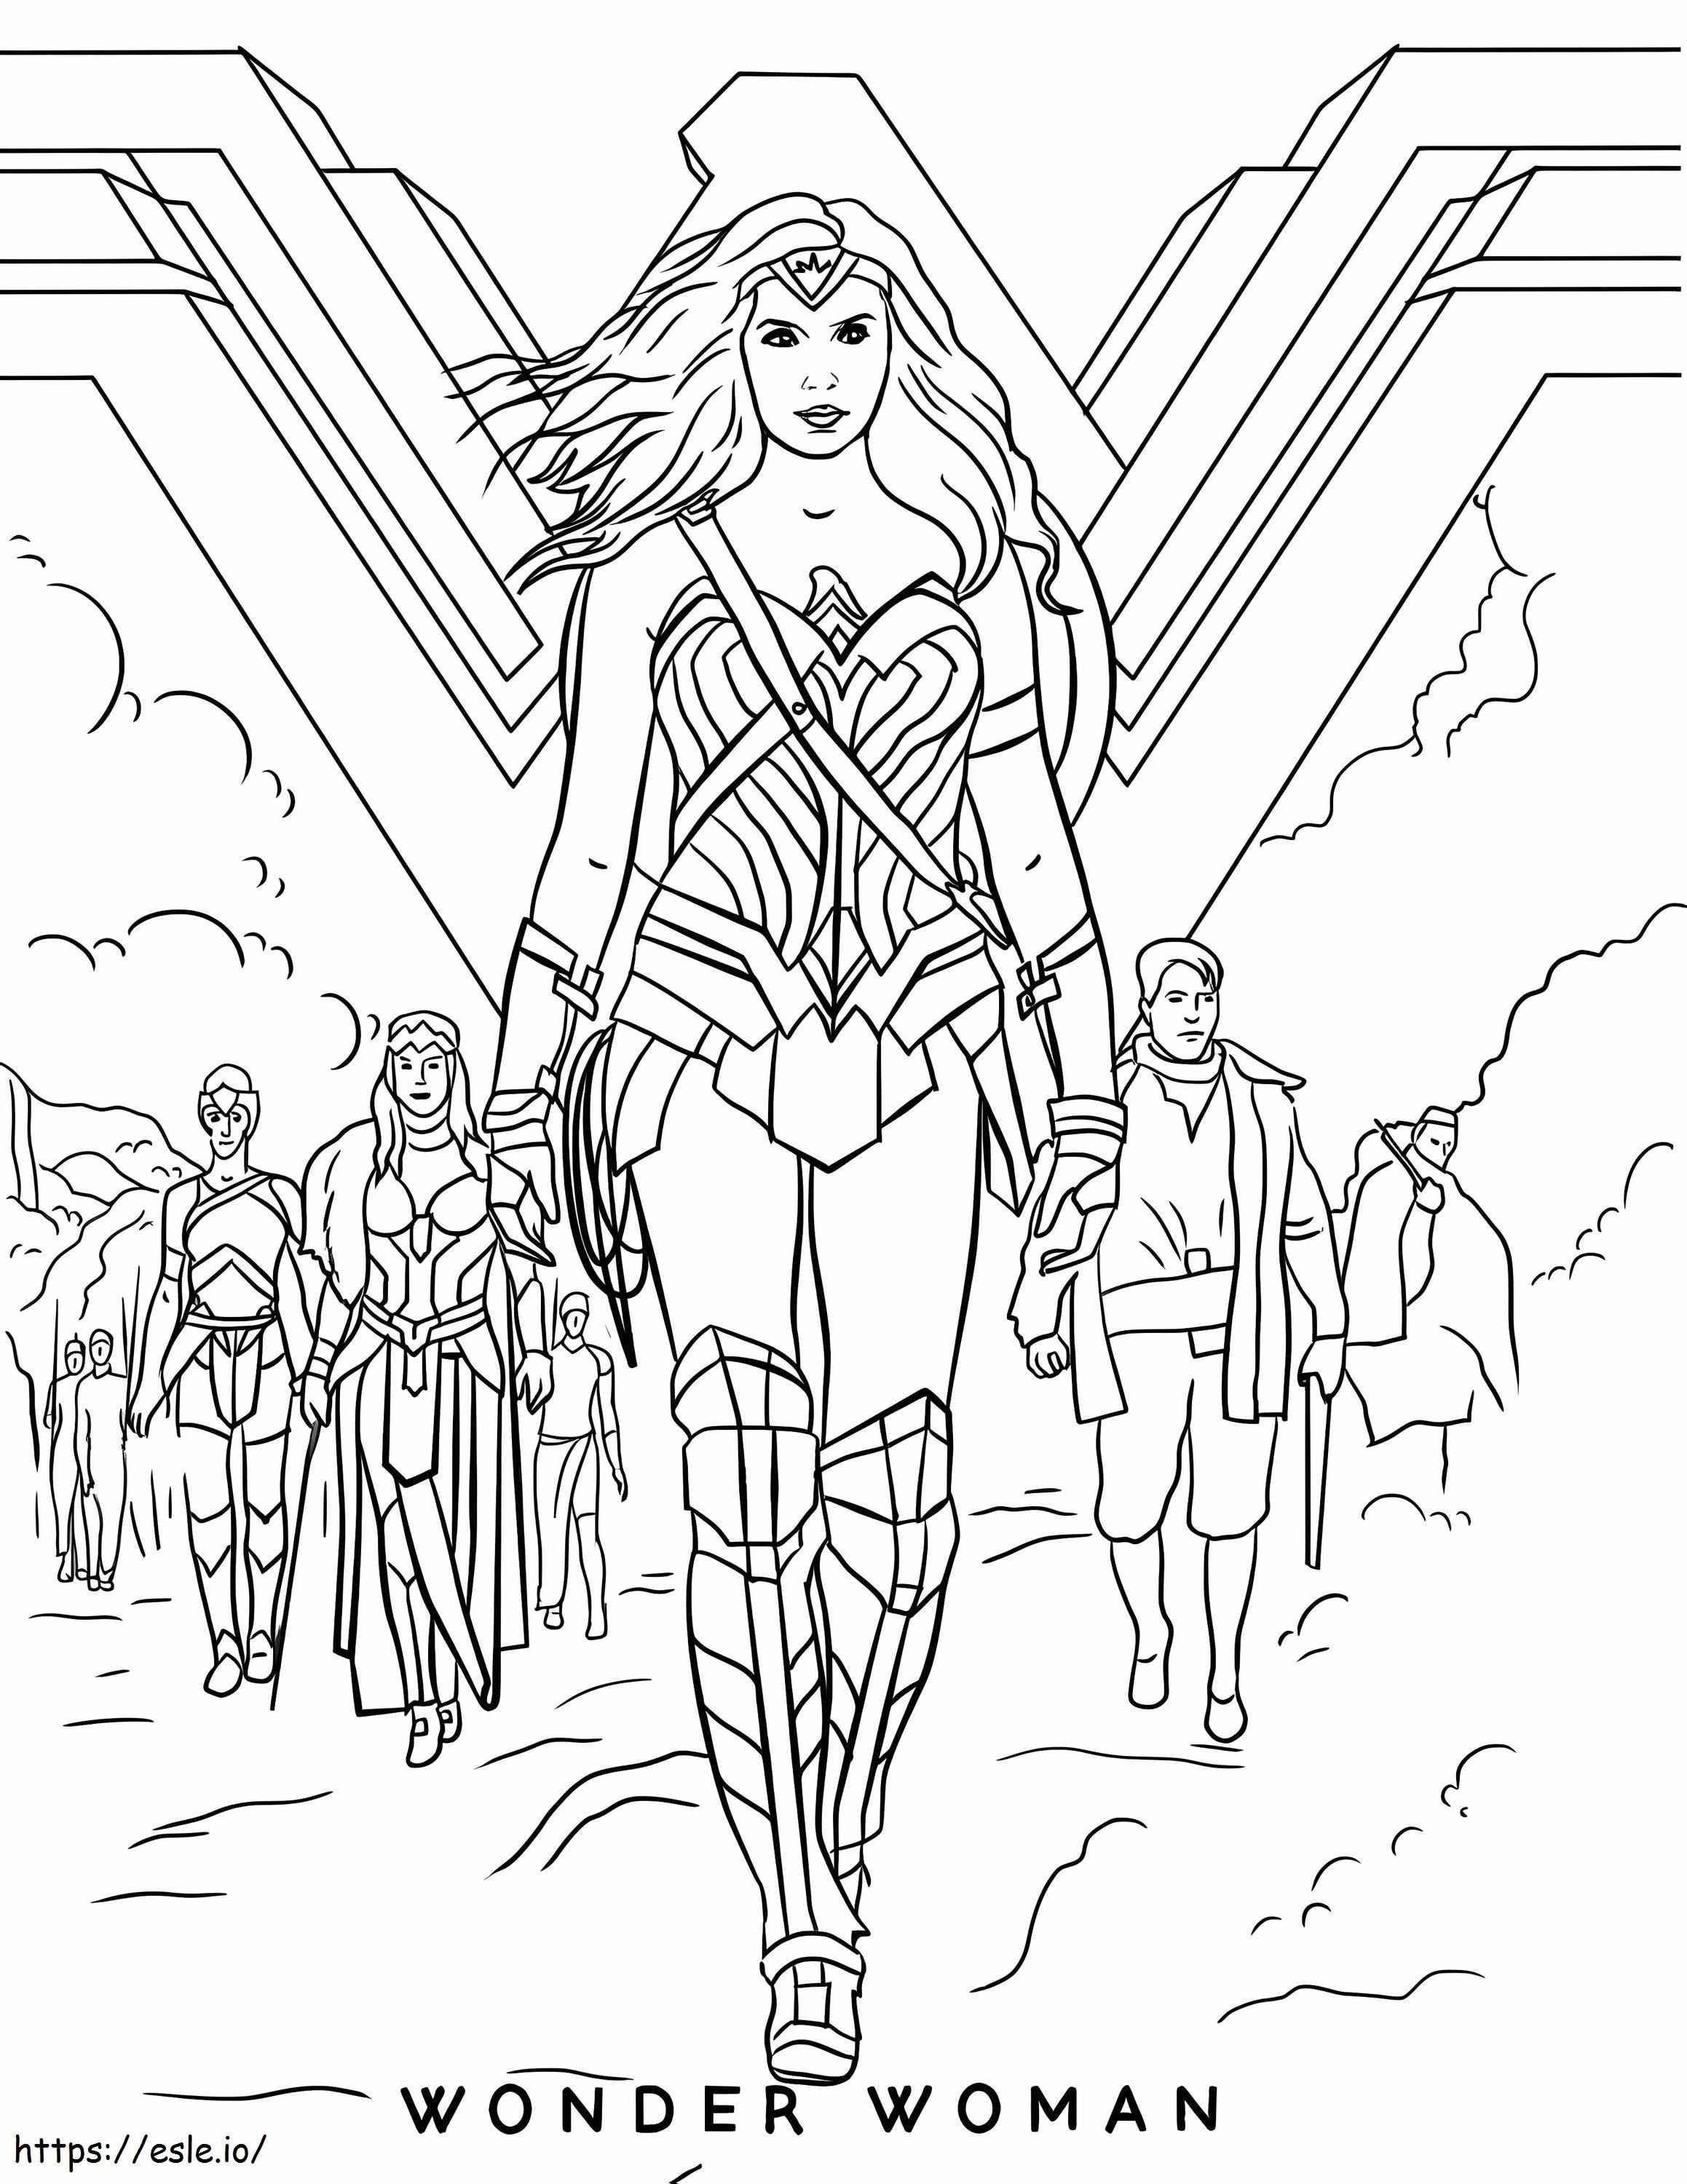 Film Wonder Woman kolorowanka